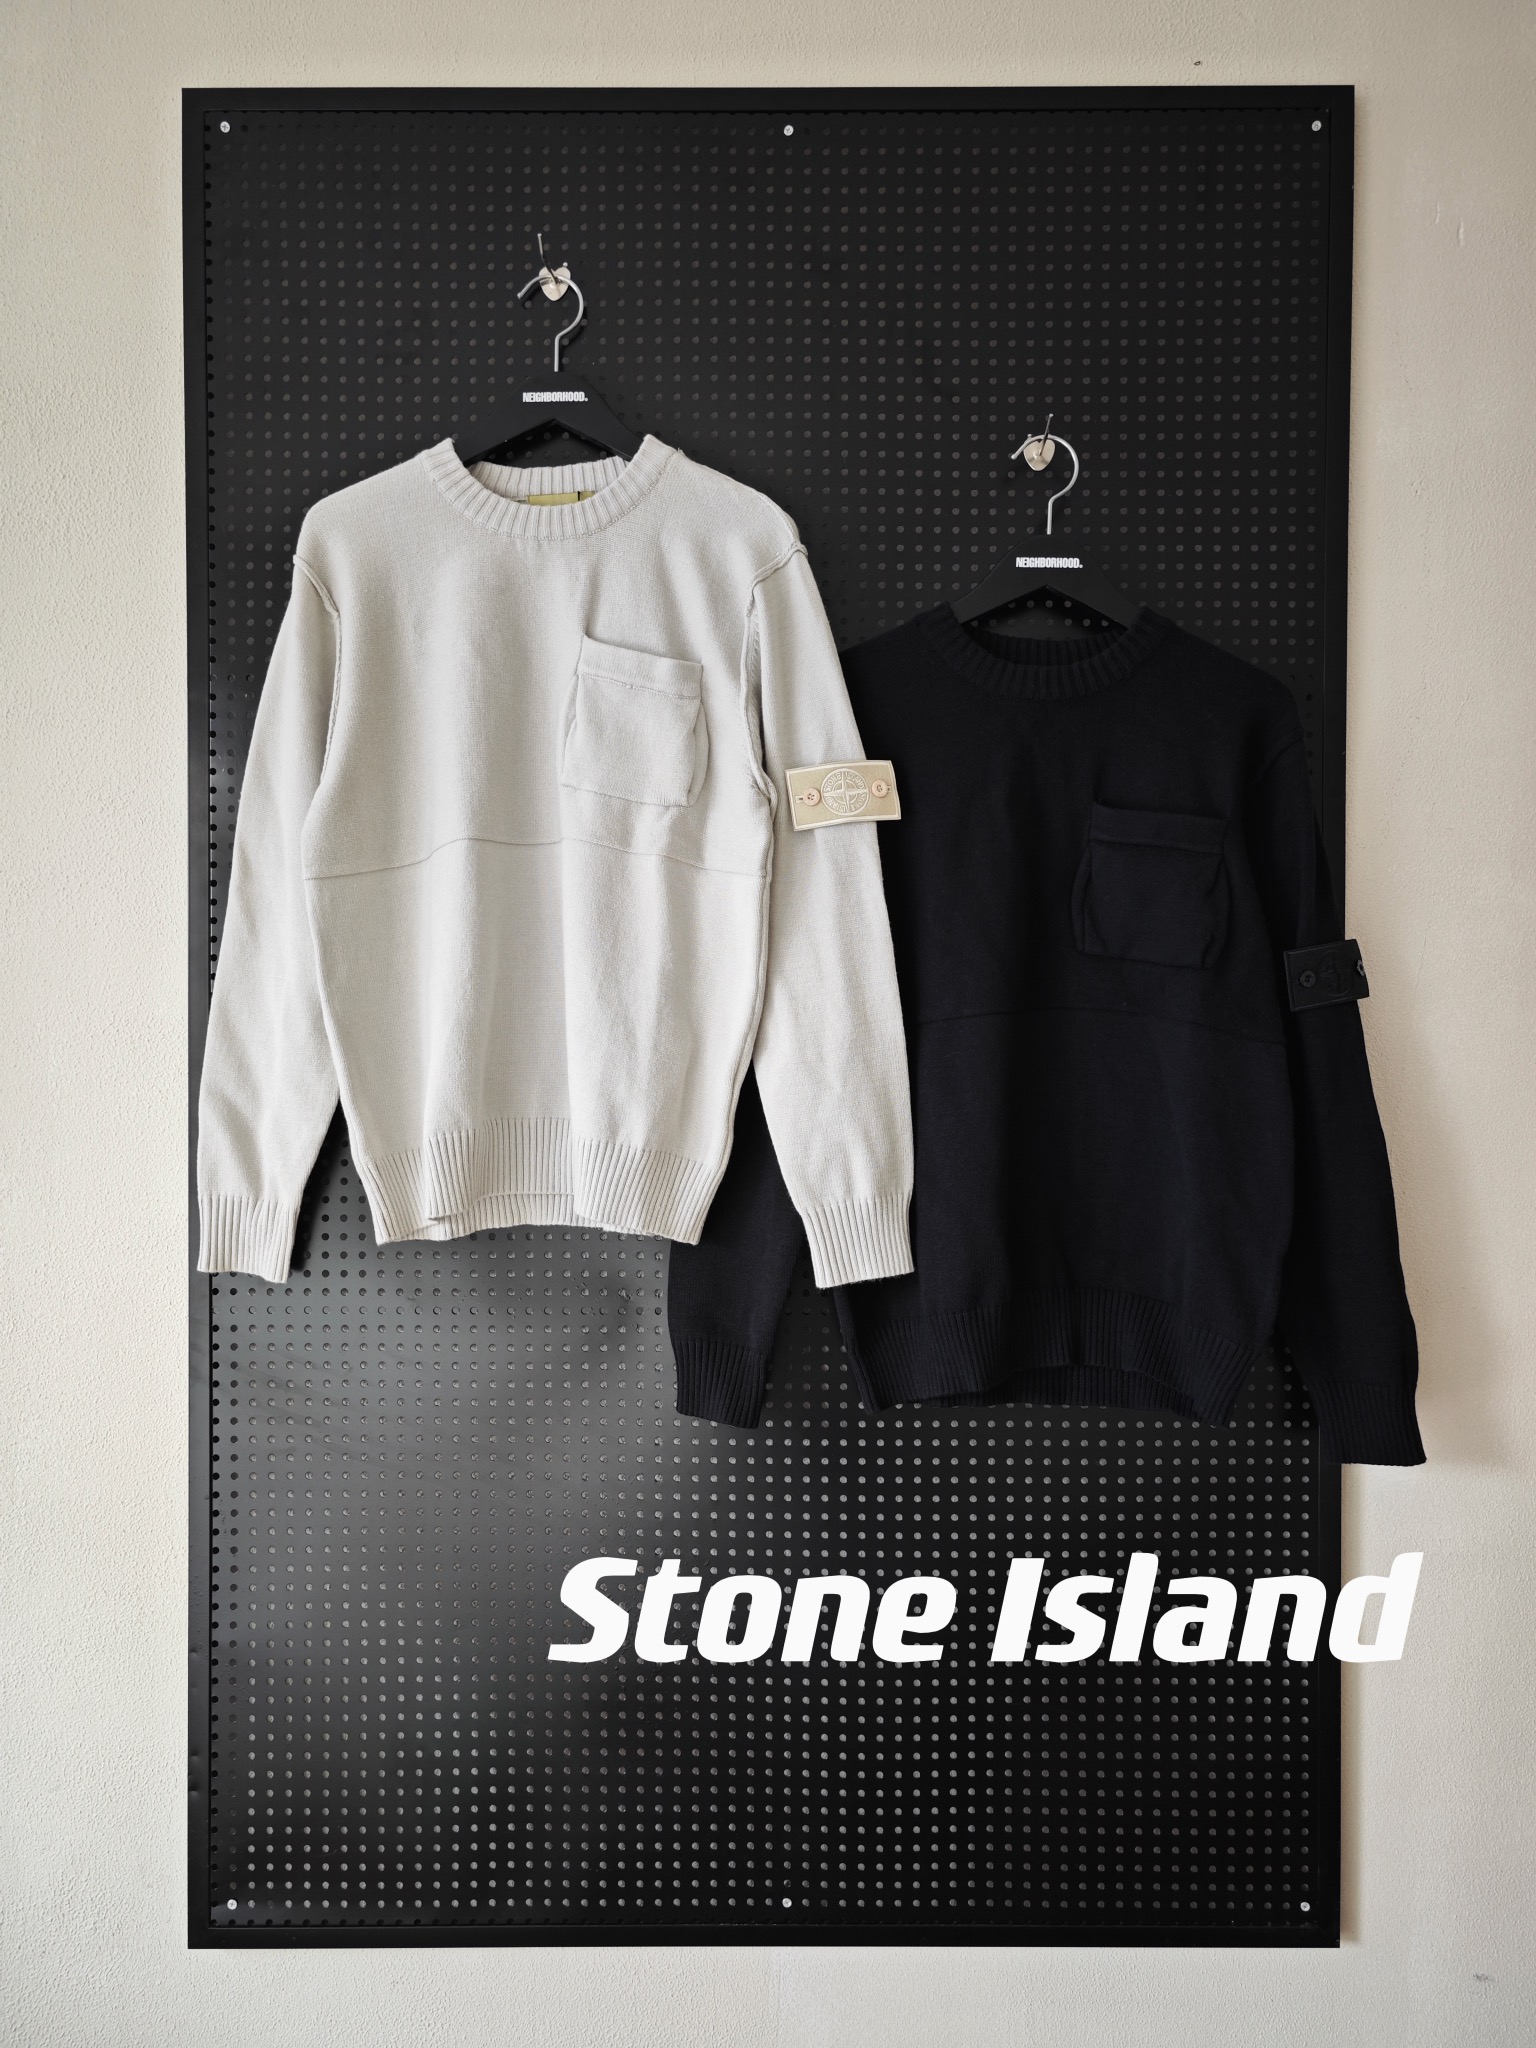 Stone Island Clothing Sweatshirts Beige Black White Splicing Unisex Knitting Lambswool Fall/Winter Collection